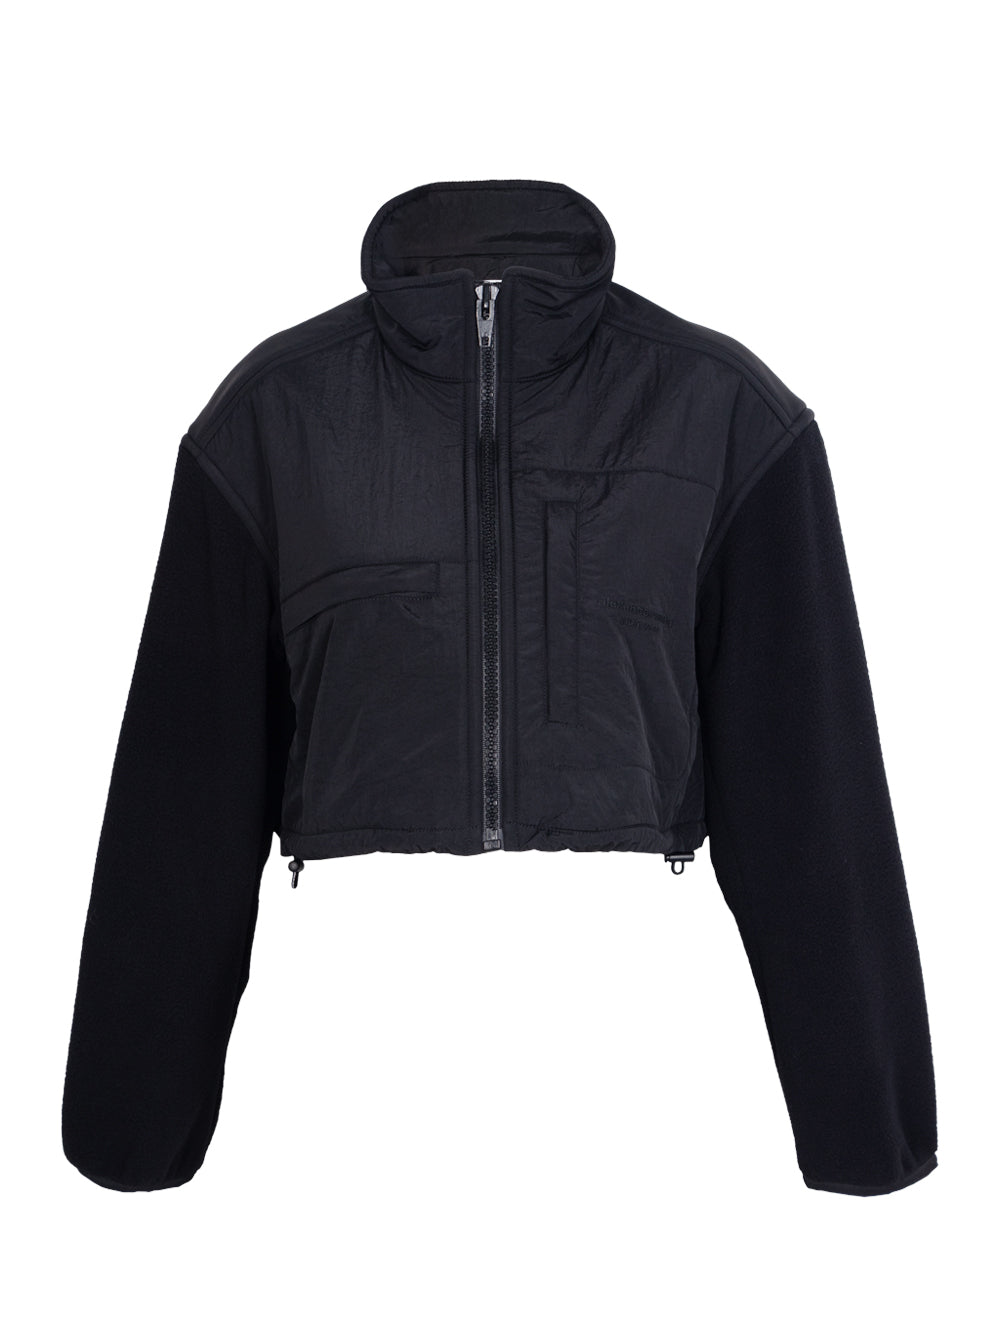 Cropped Zip-Up Jacket In Teddy Fleece (Black)